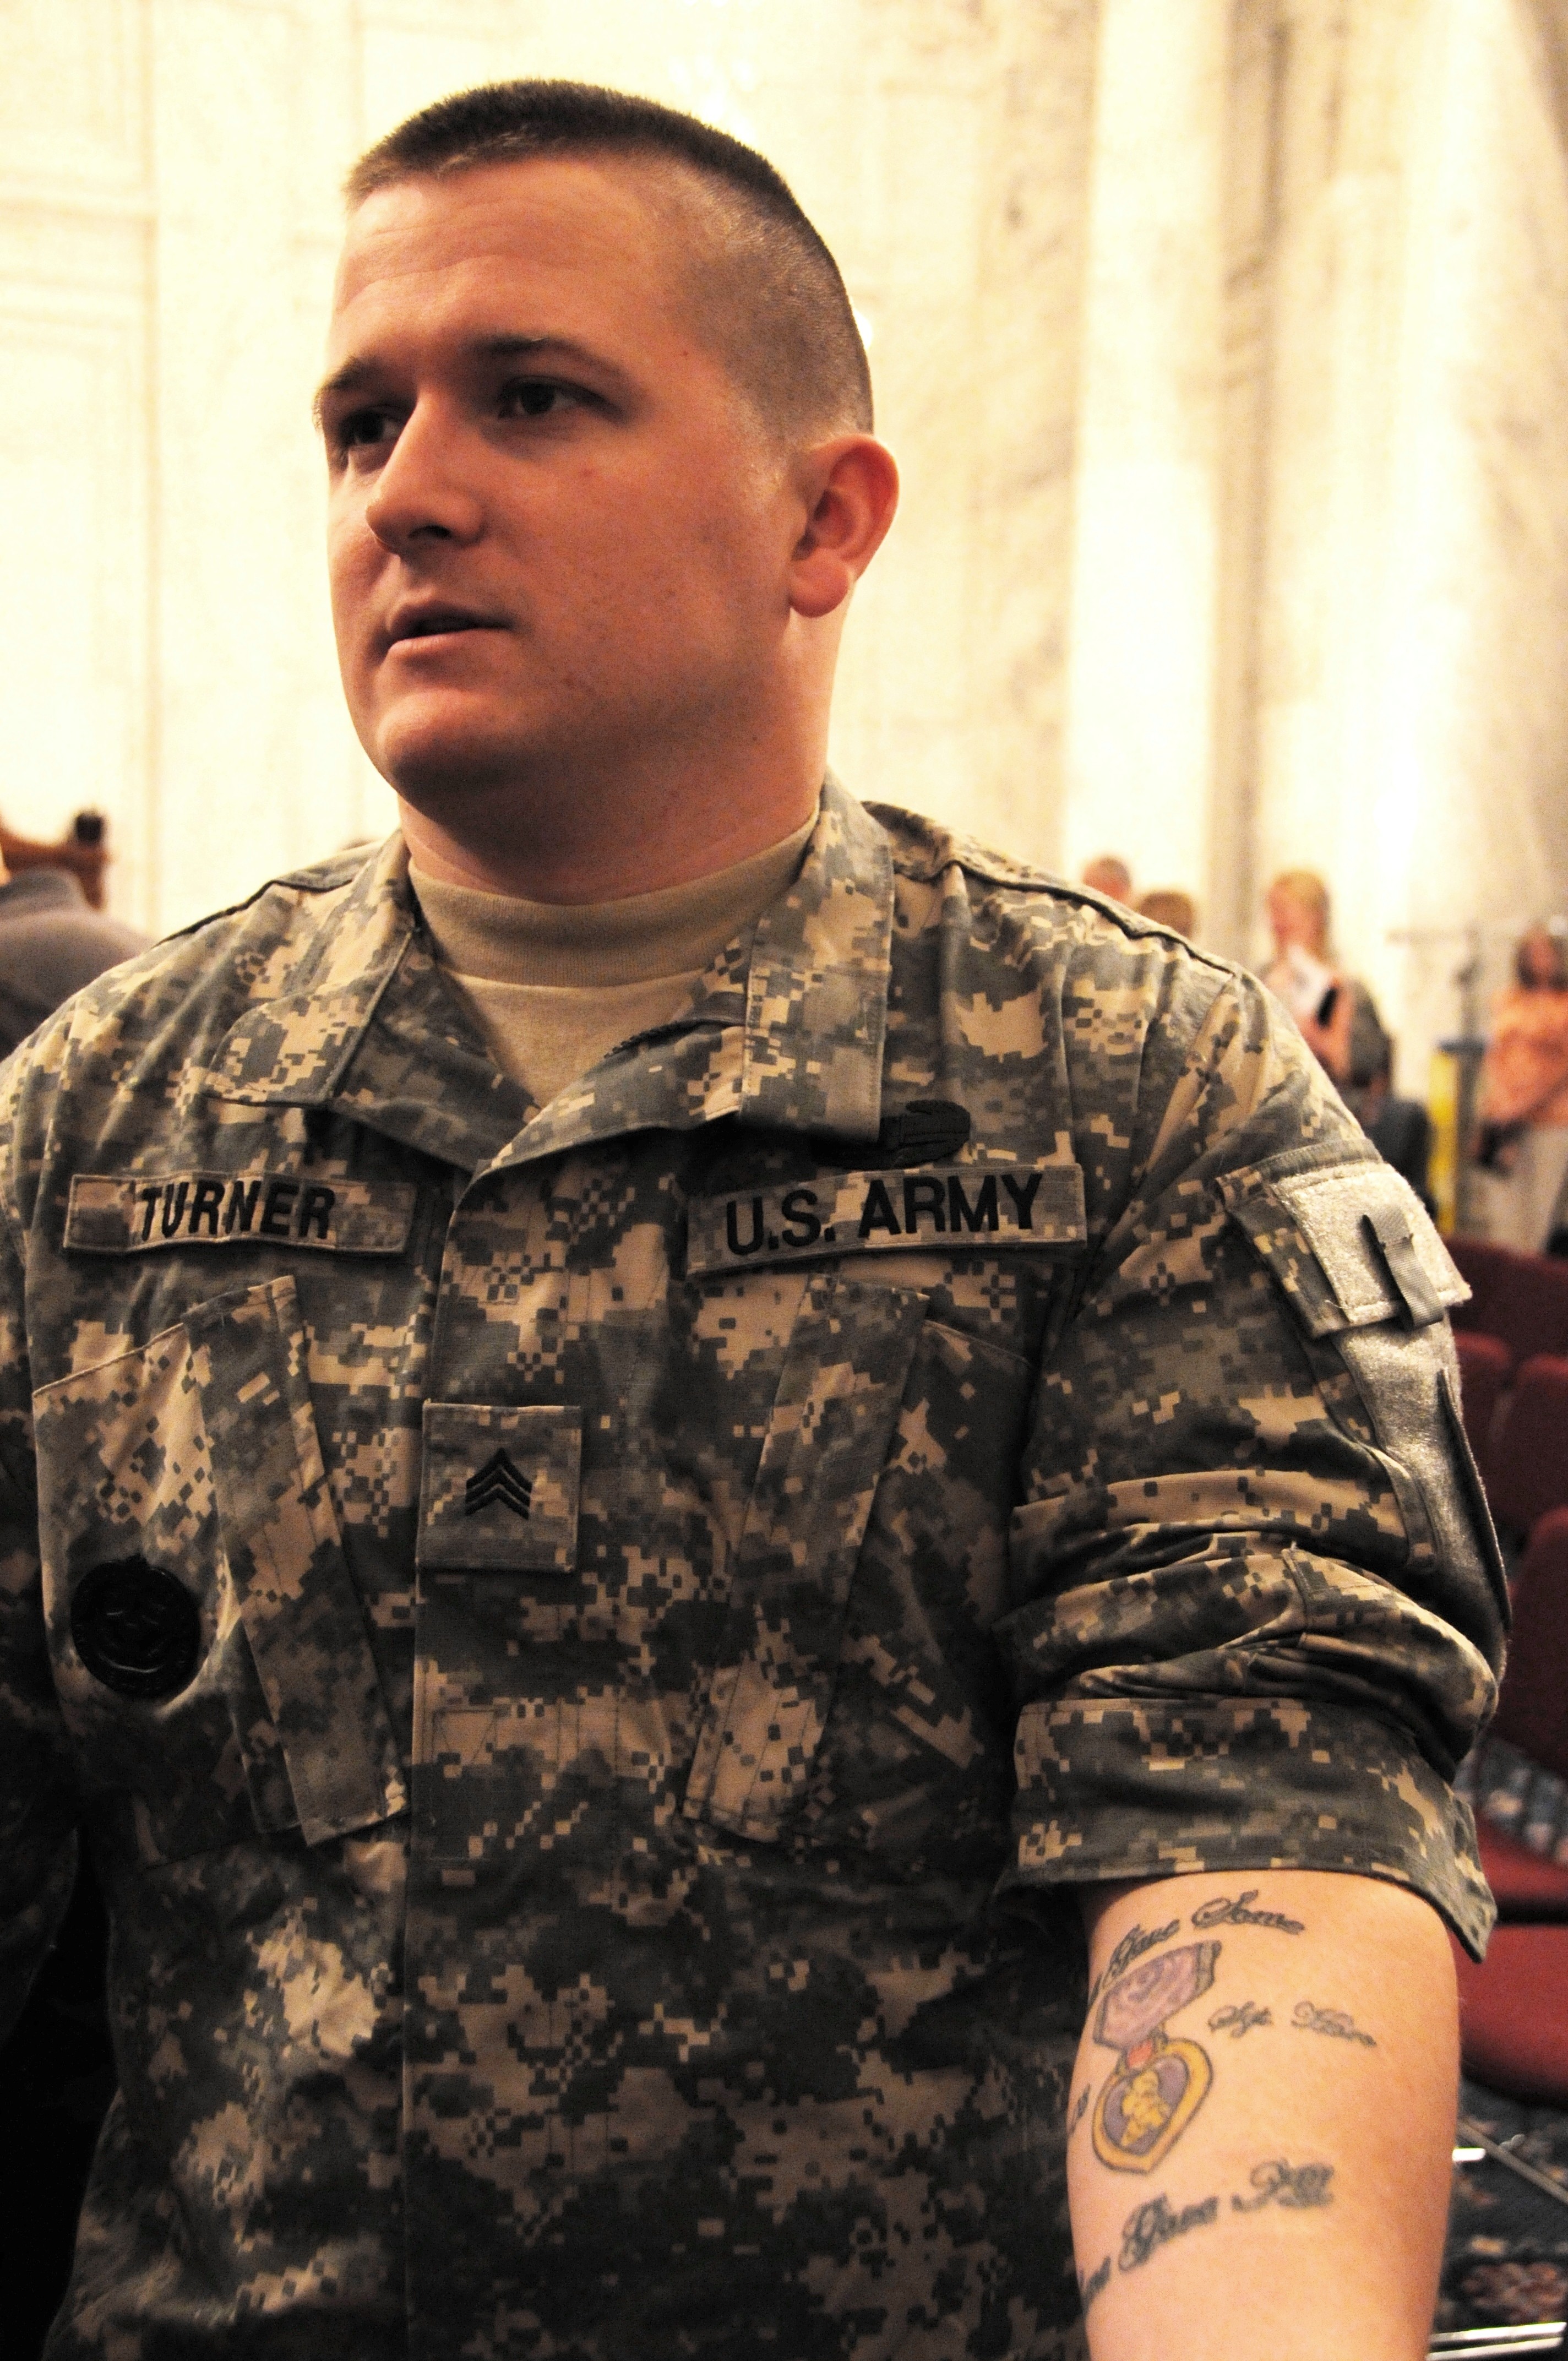 tattoo of merit military service